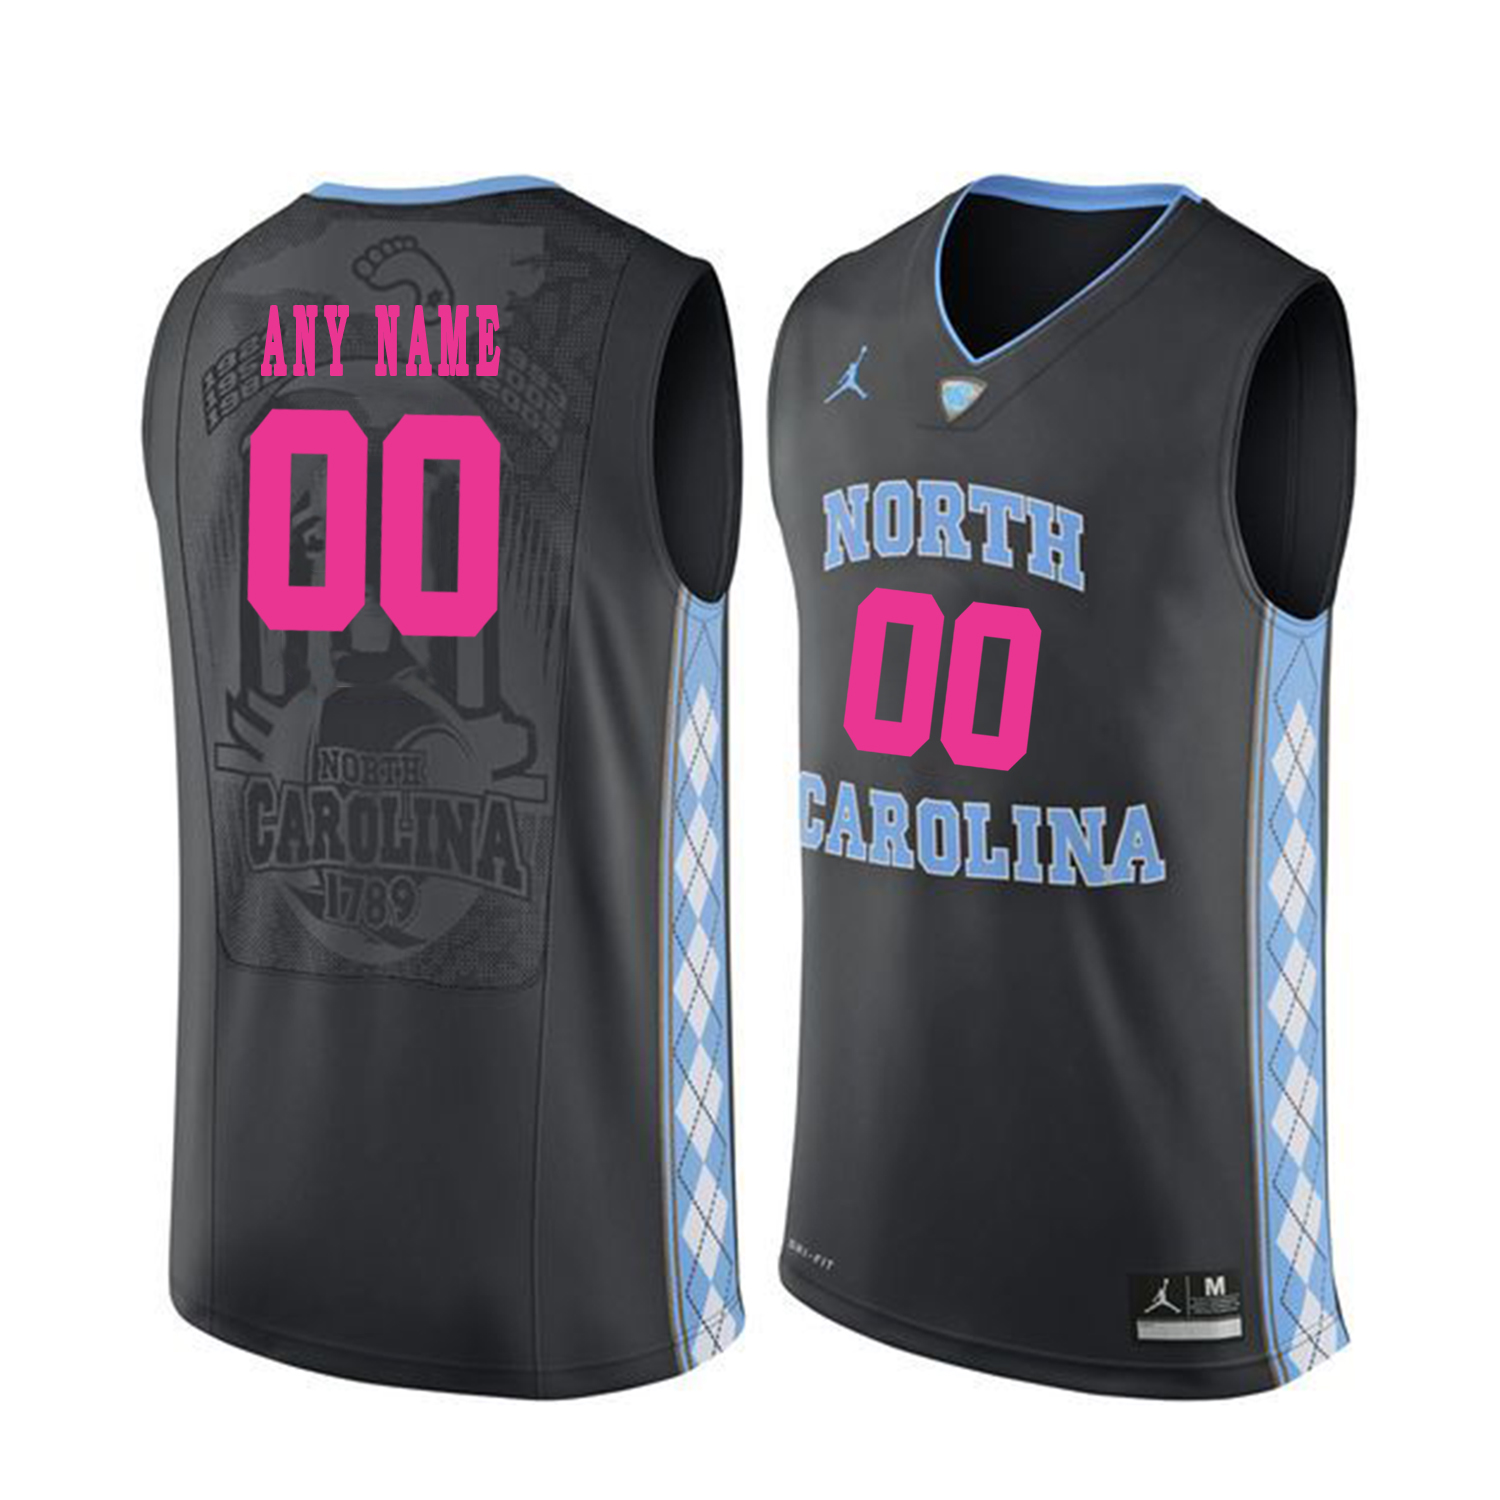 North Carolina Tar Heels Black 2018 Breast Cancer Awareness Men's Customized College Basketball Jersey